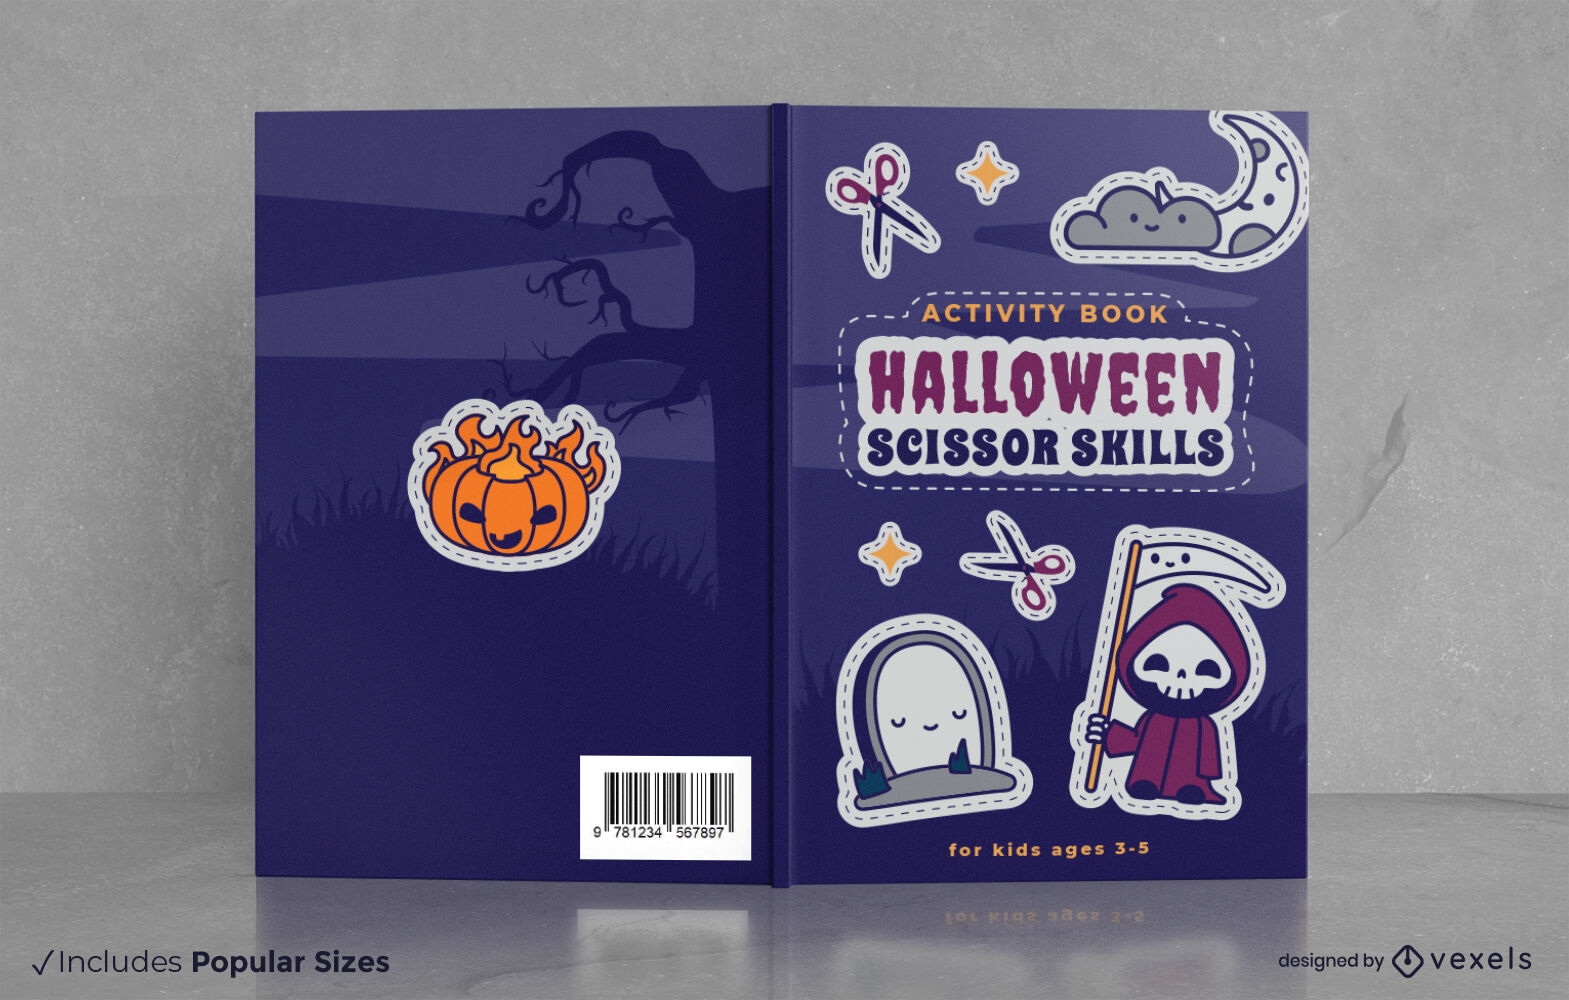 Halloween scissor skills book cover